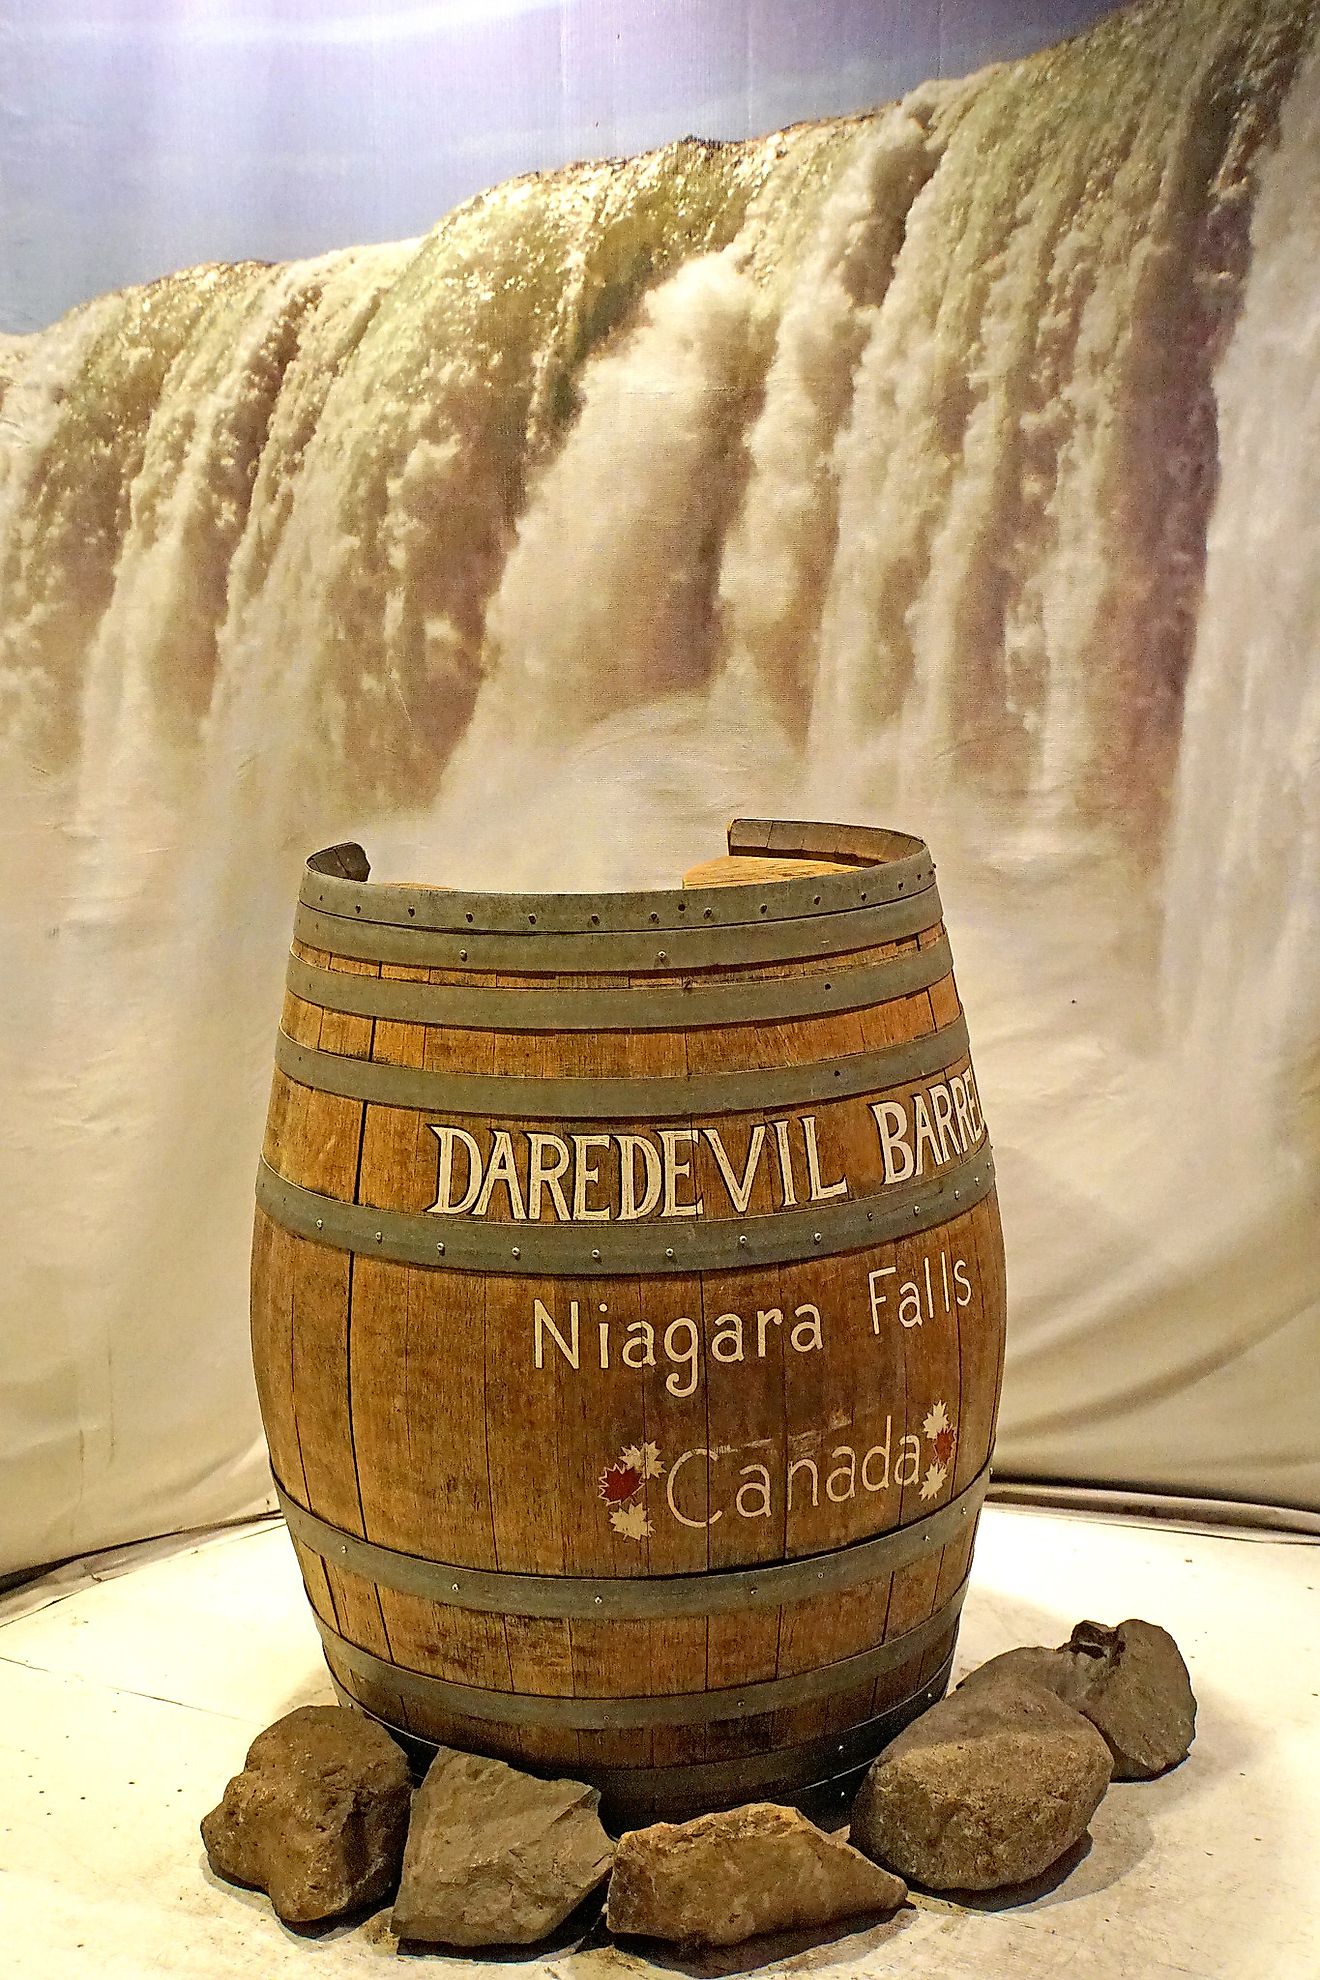 Inside the Niagara Falls History Museum. Image credit: Dennis Jarvis